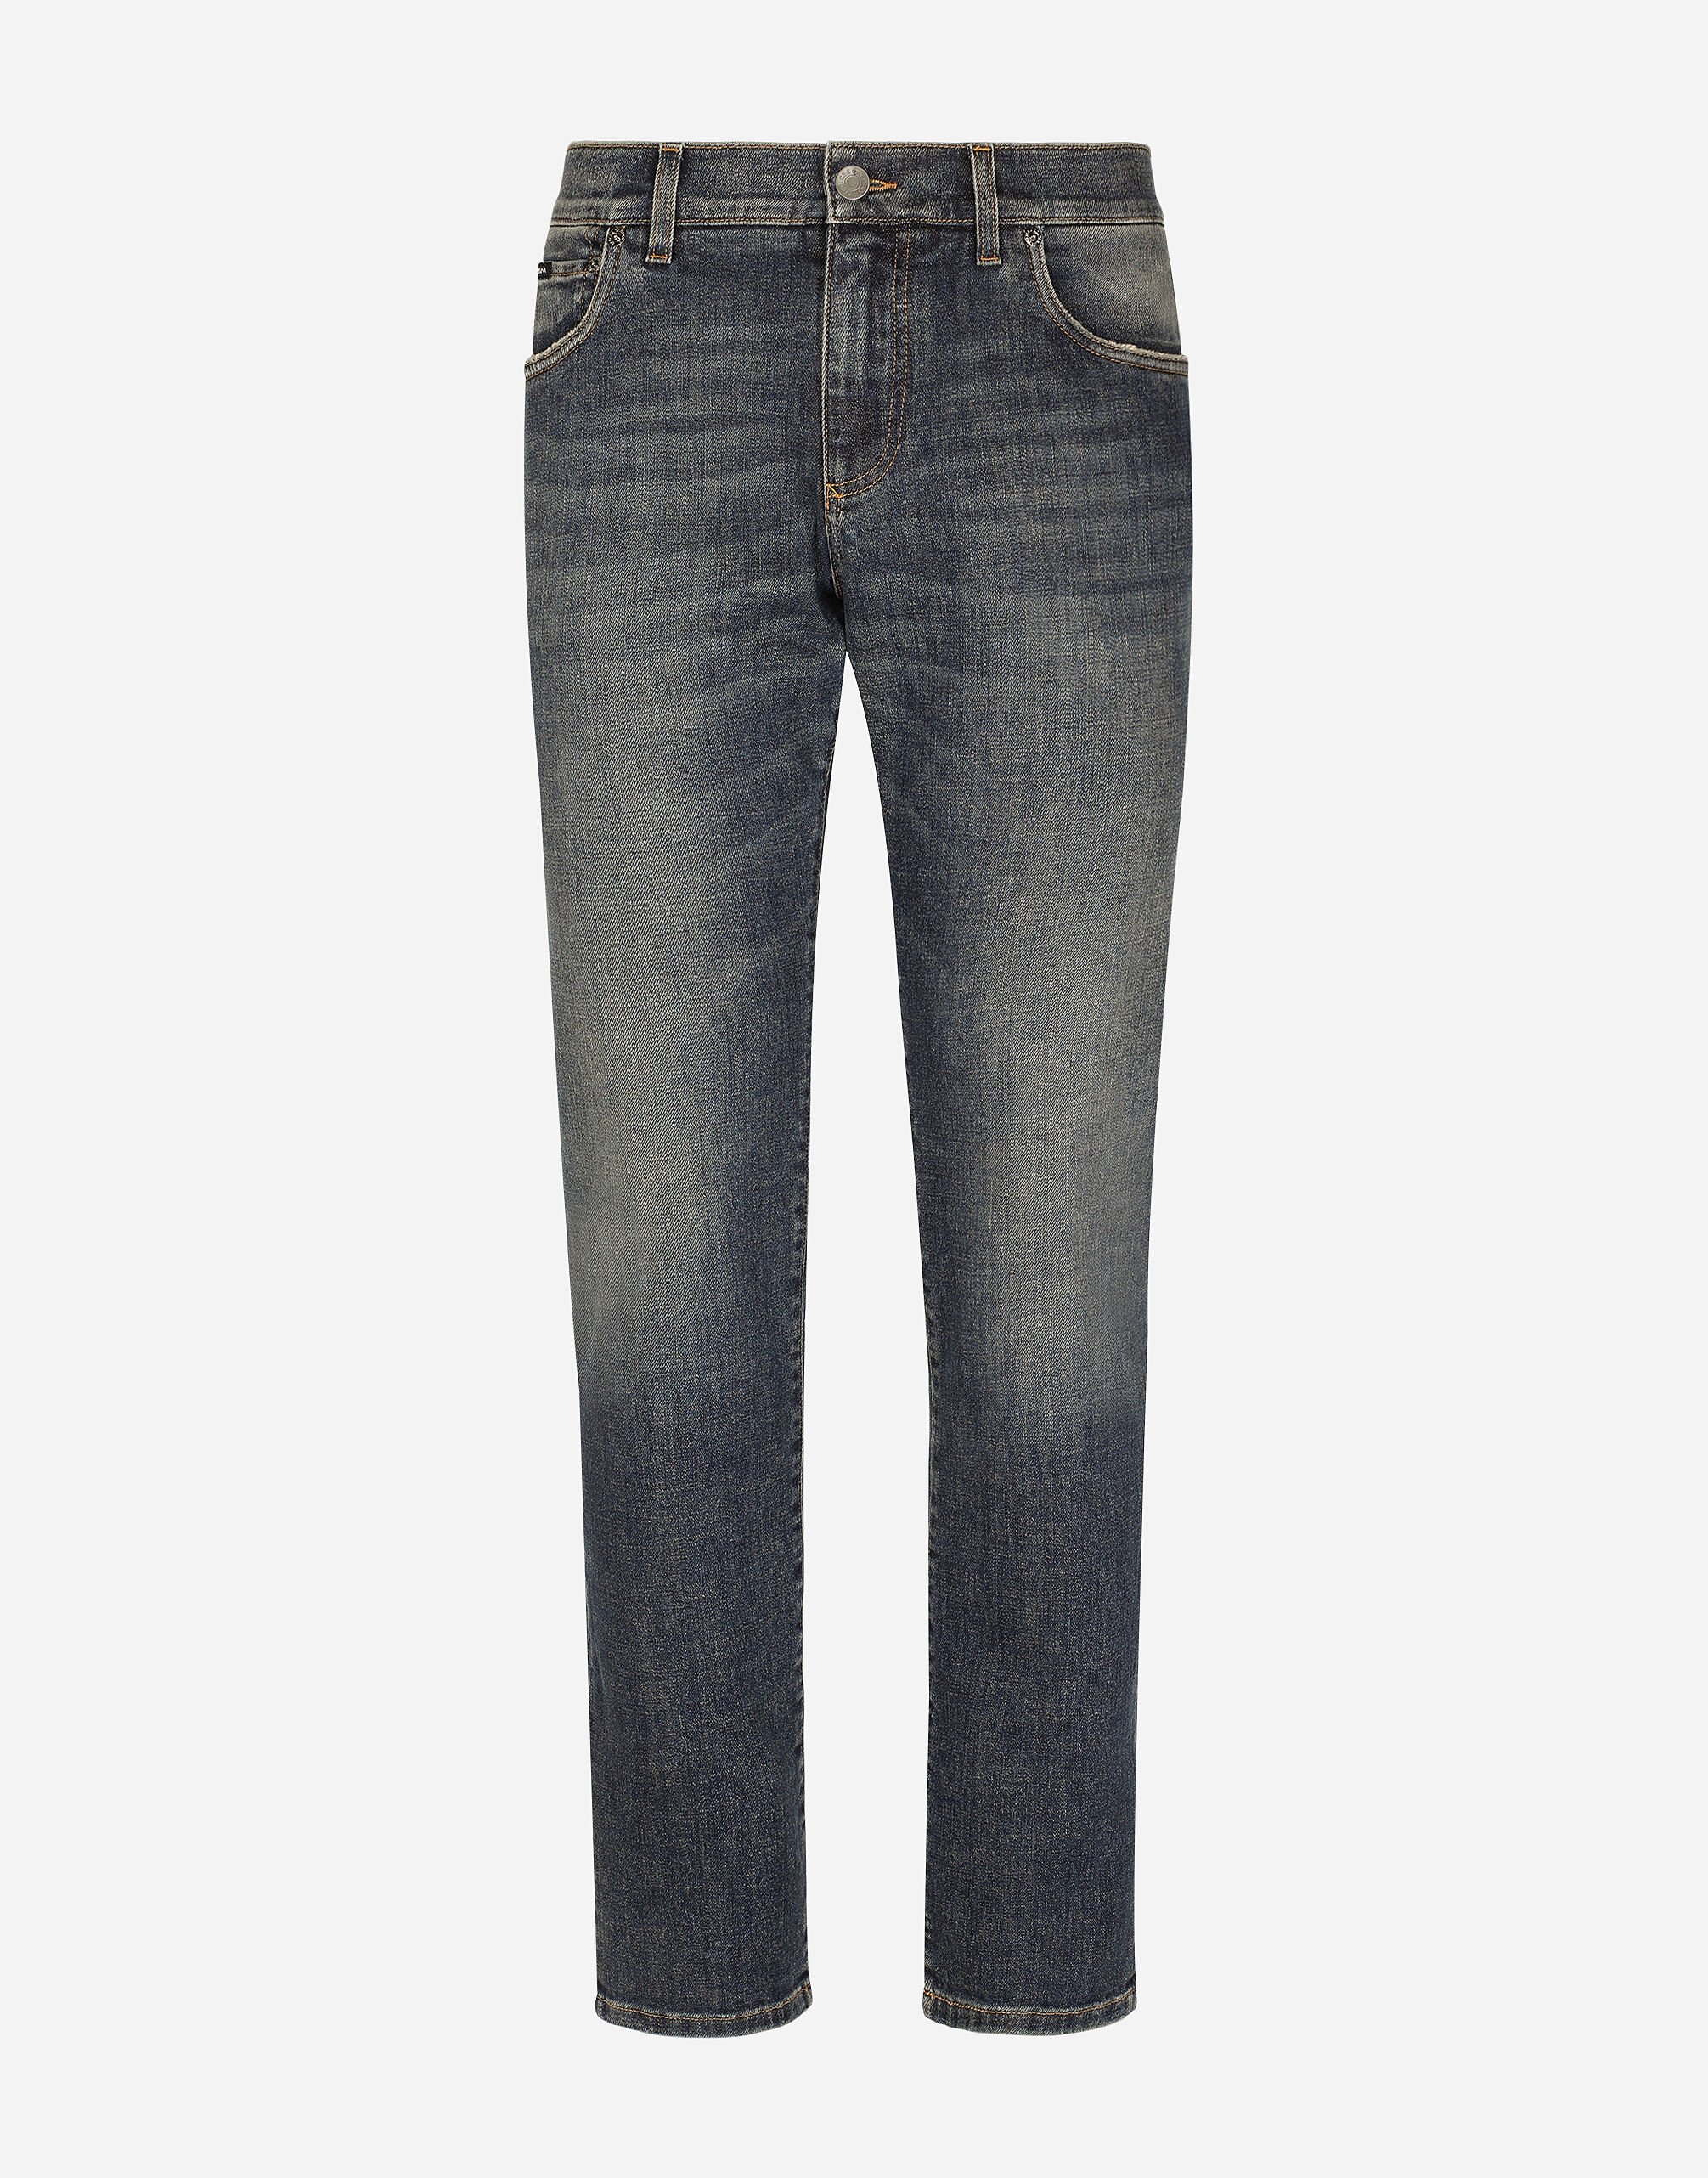 Dolce & Gabbana Light blue wash skinny stretch jeans Black VG6184VN187